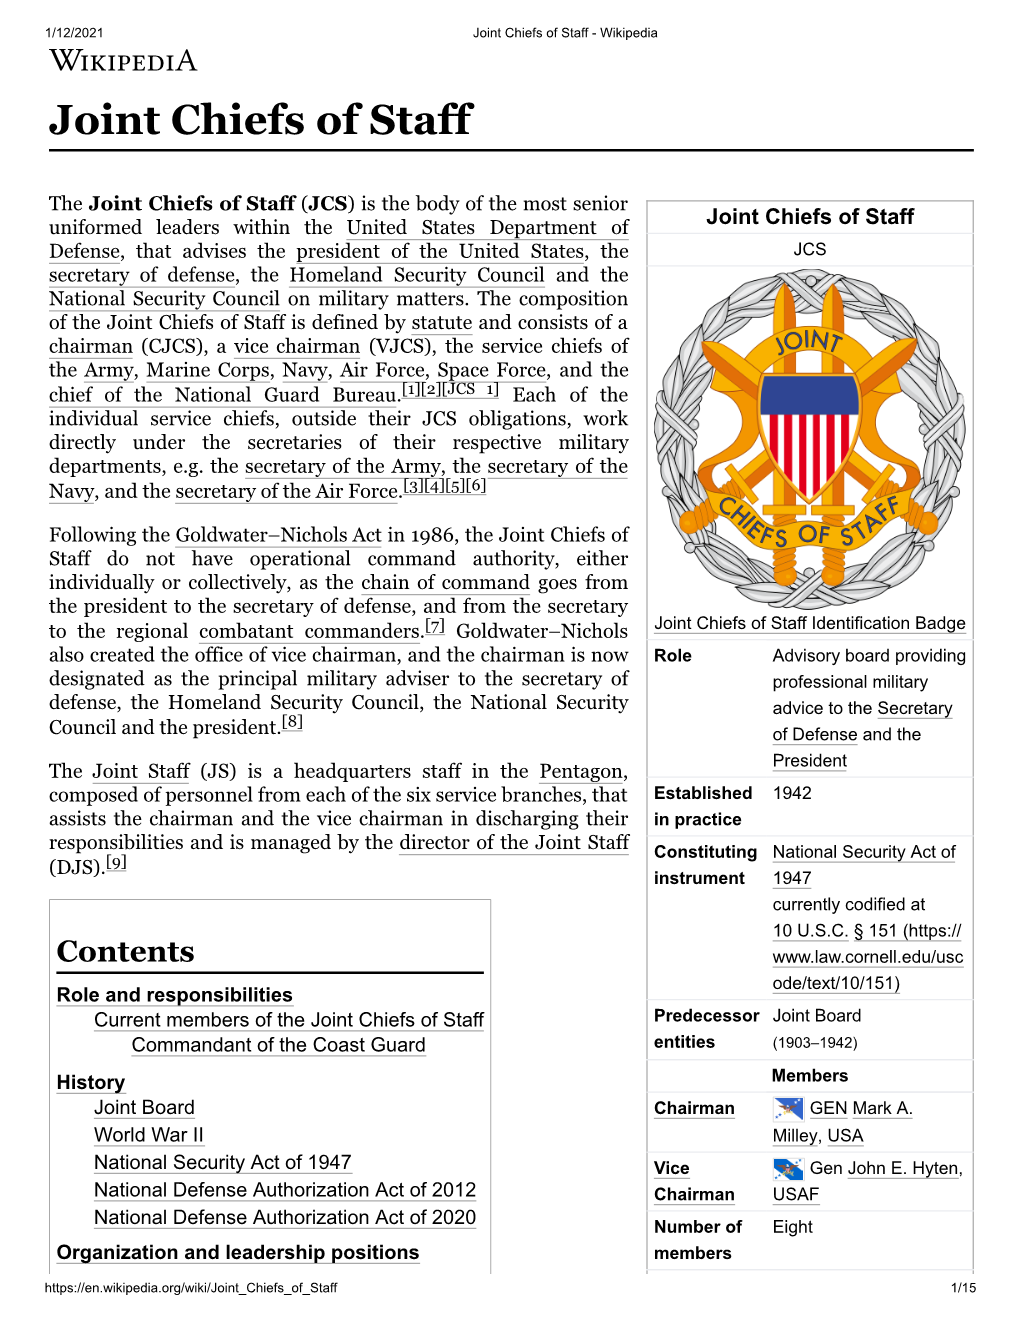 Joint Chiefs of Staff - Wikipedia